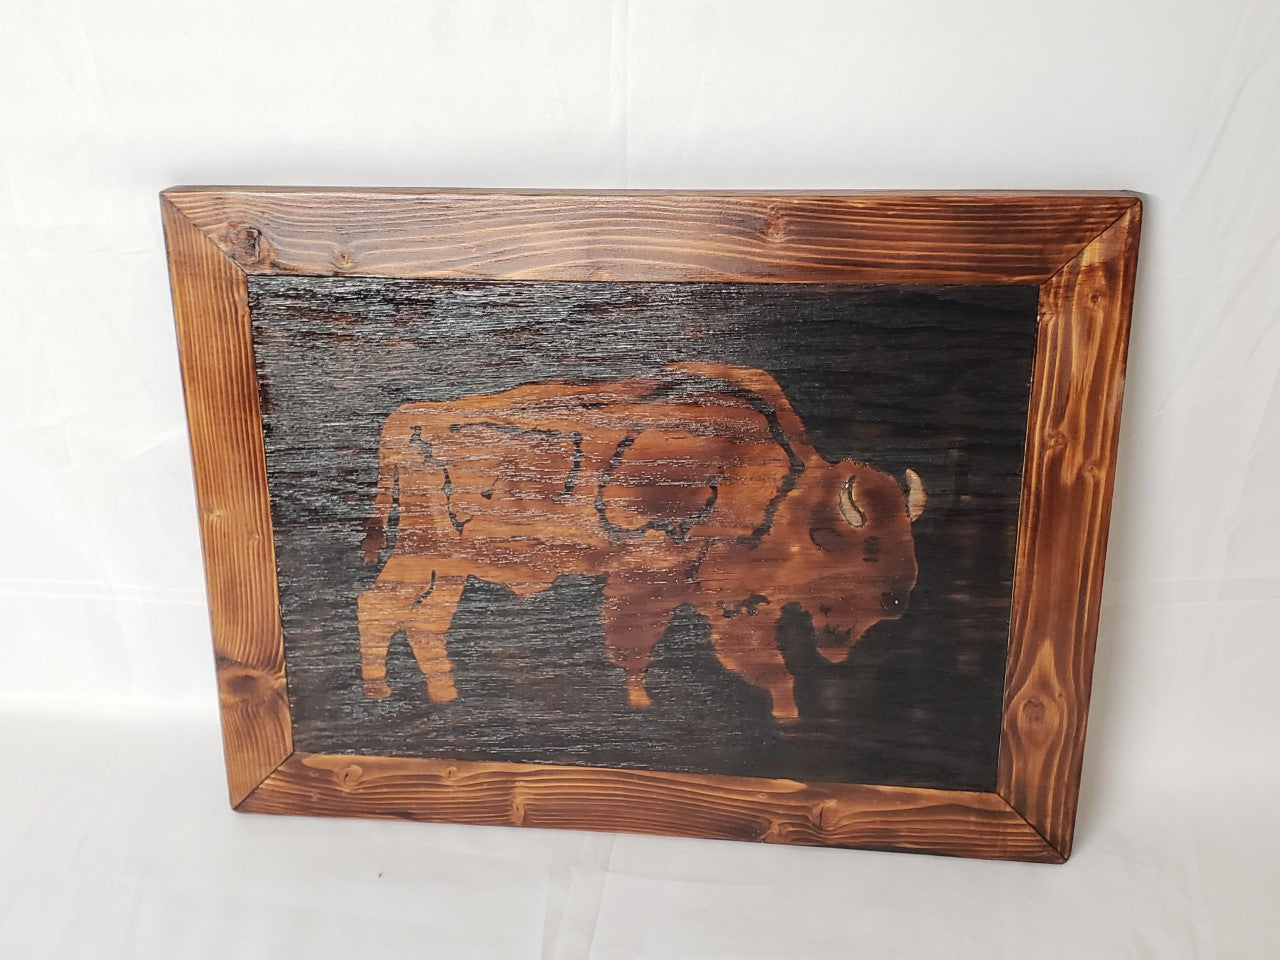 Wood Burned Buffalo In Wooden Frame